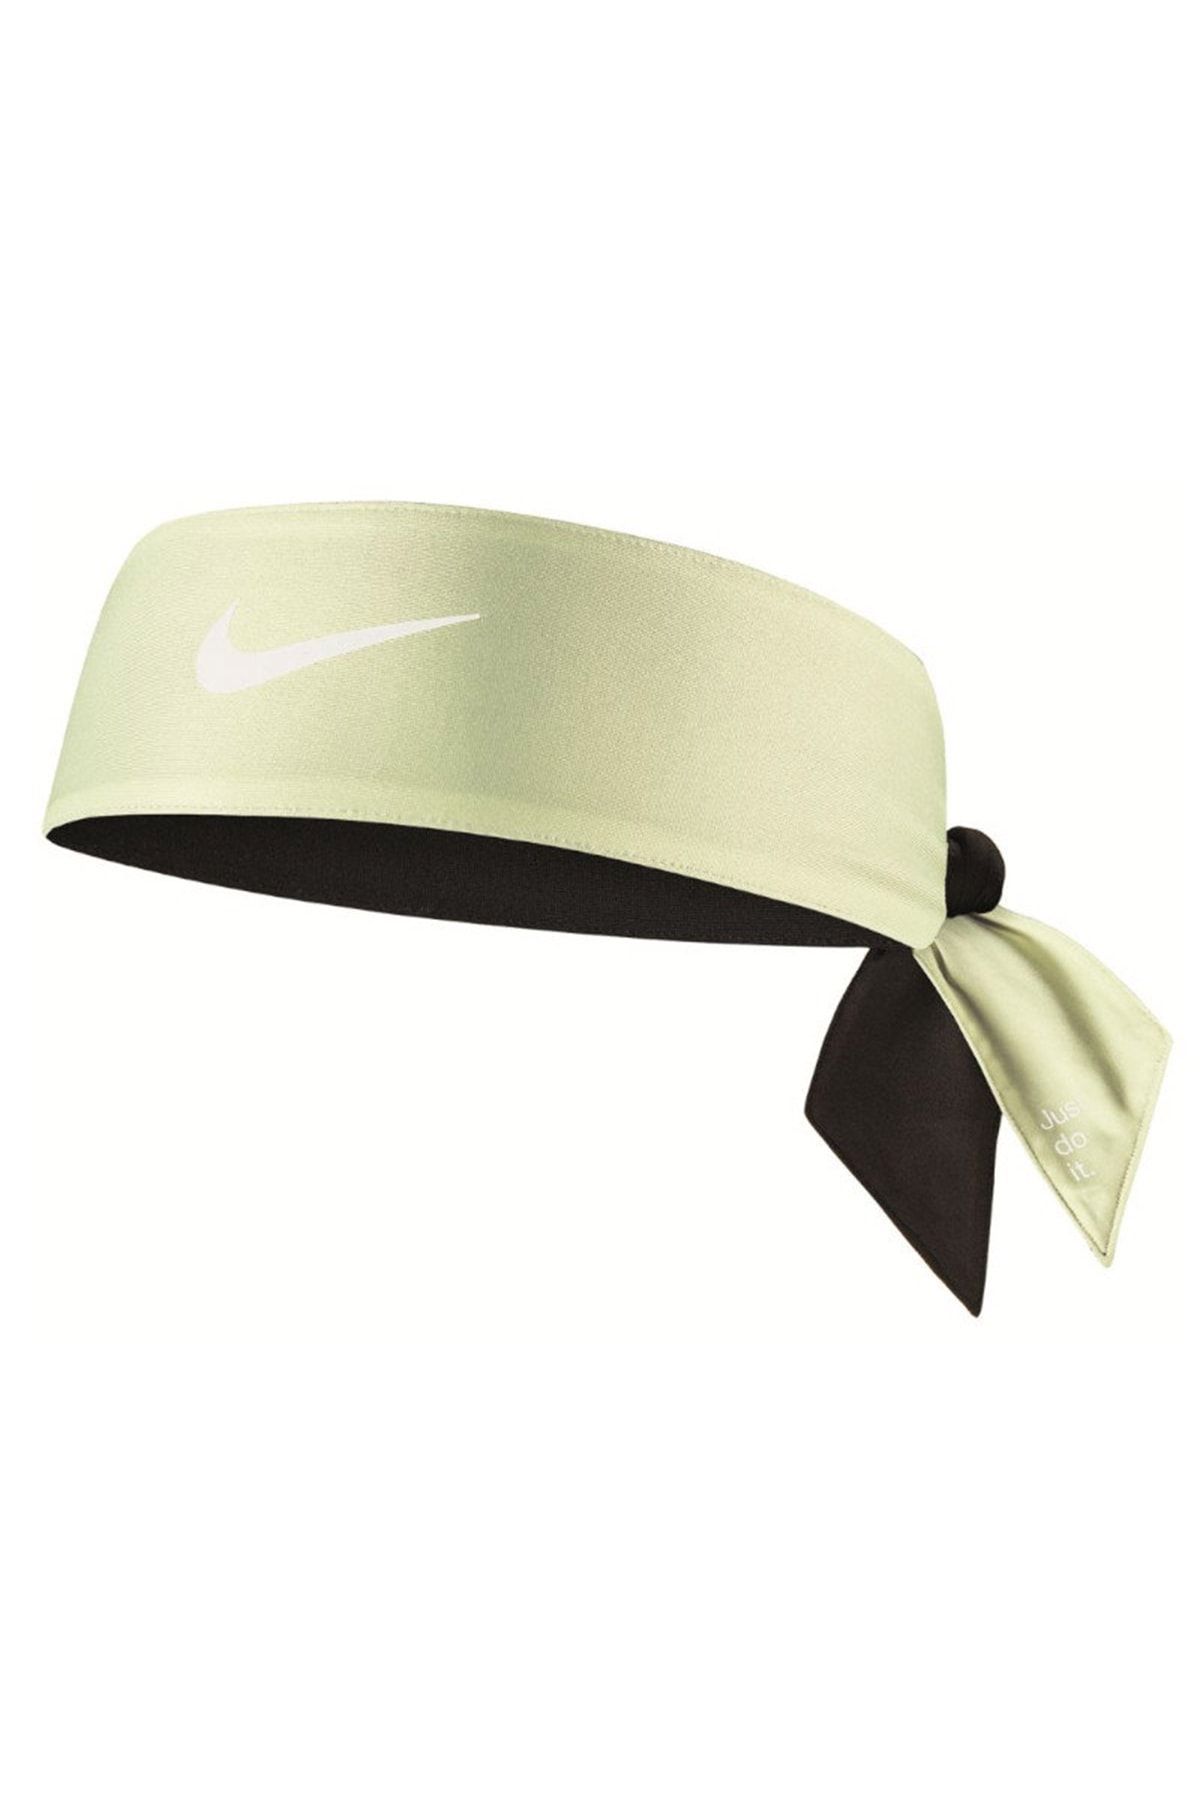 Nike Dri-fit Head Tie 2.0 Unisex Yeşil Antrenman Saç Bandı N.100.3620.334.os